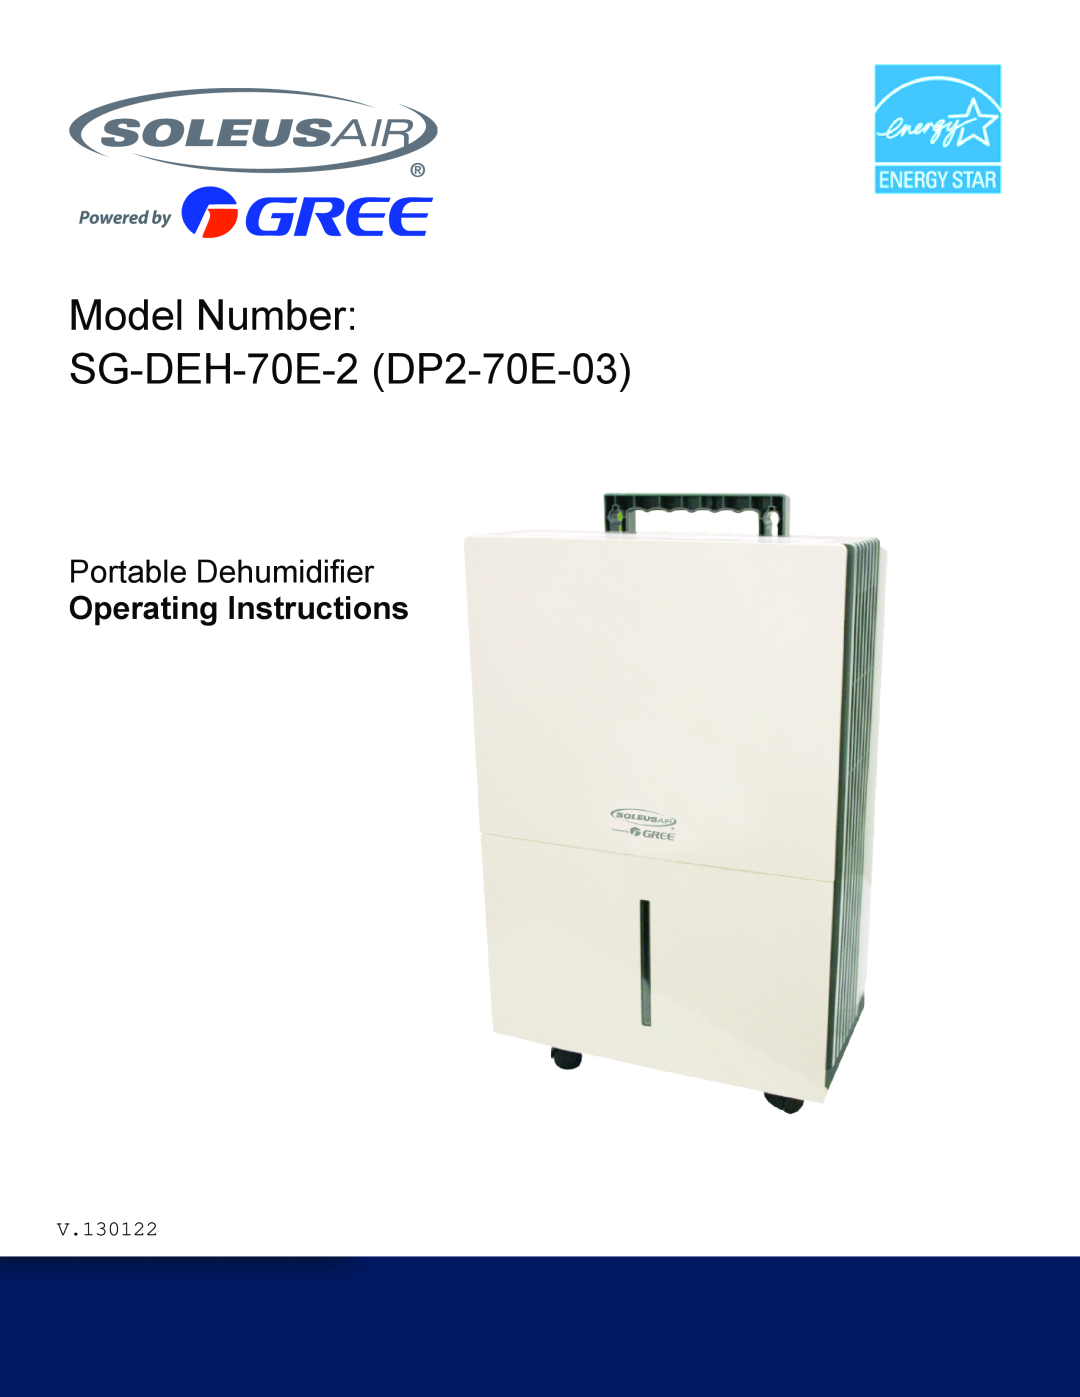 Soleus Air SG-DEH-70E-2 (DP2-70E-03) operating instructions Model Number SG-DEH-70E-2 DP2-70E-03, Portable Dehumidifier 